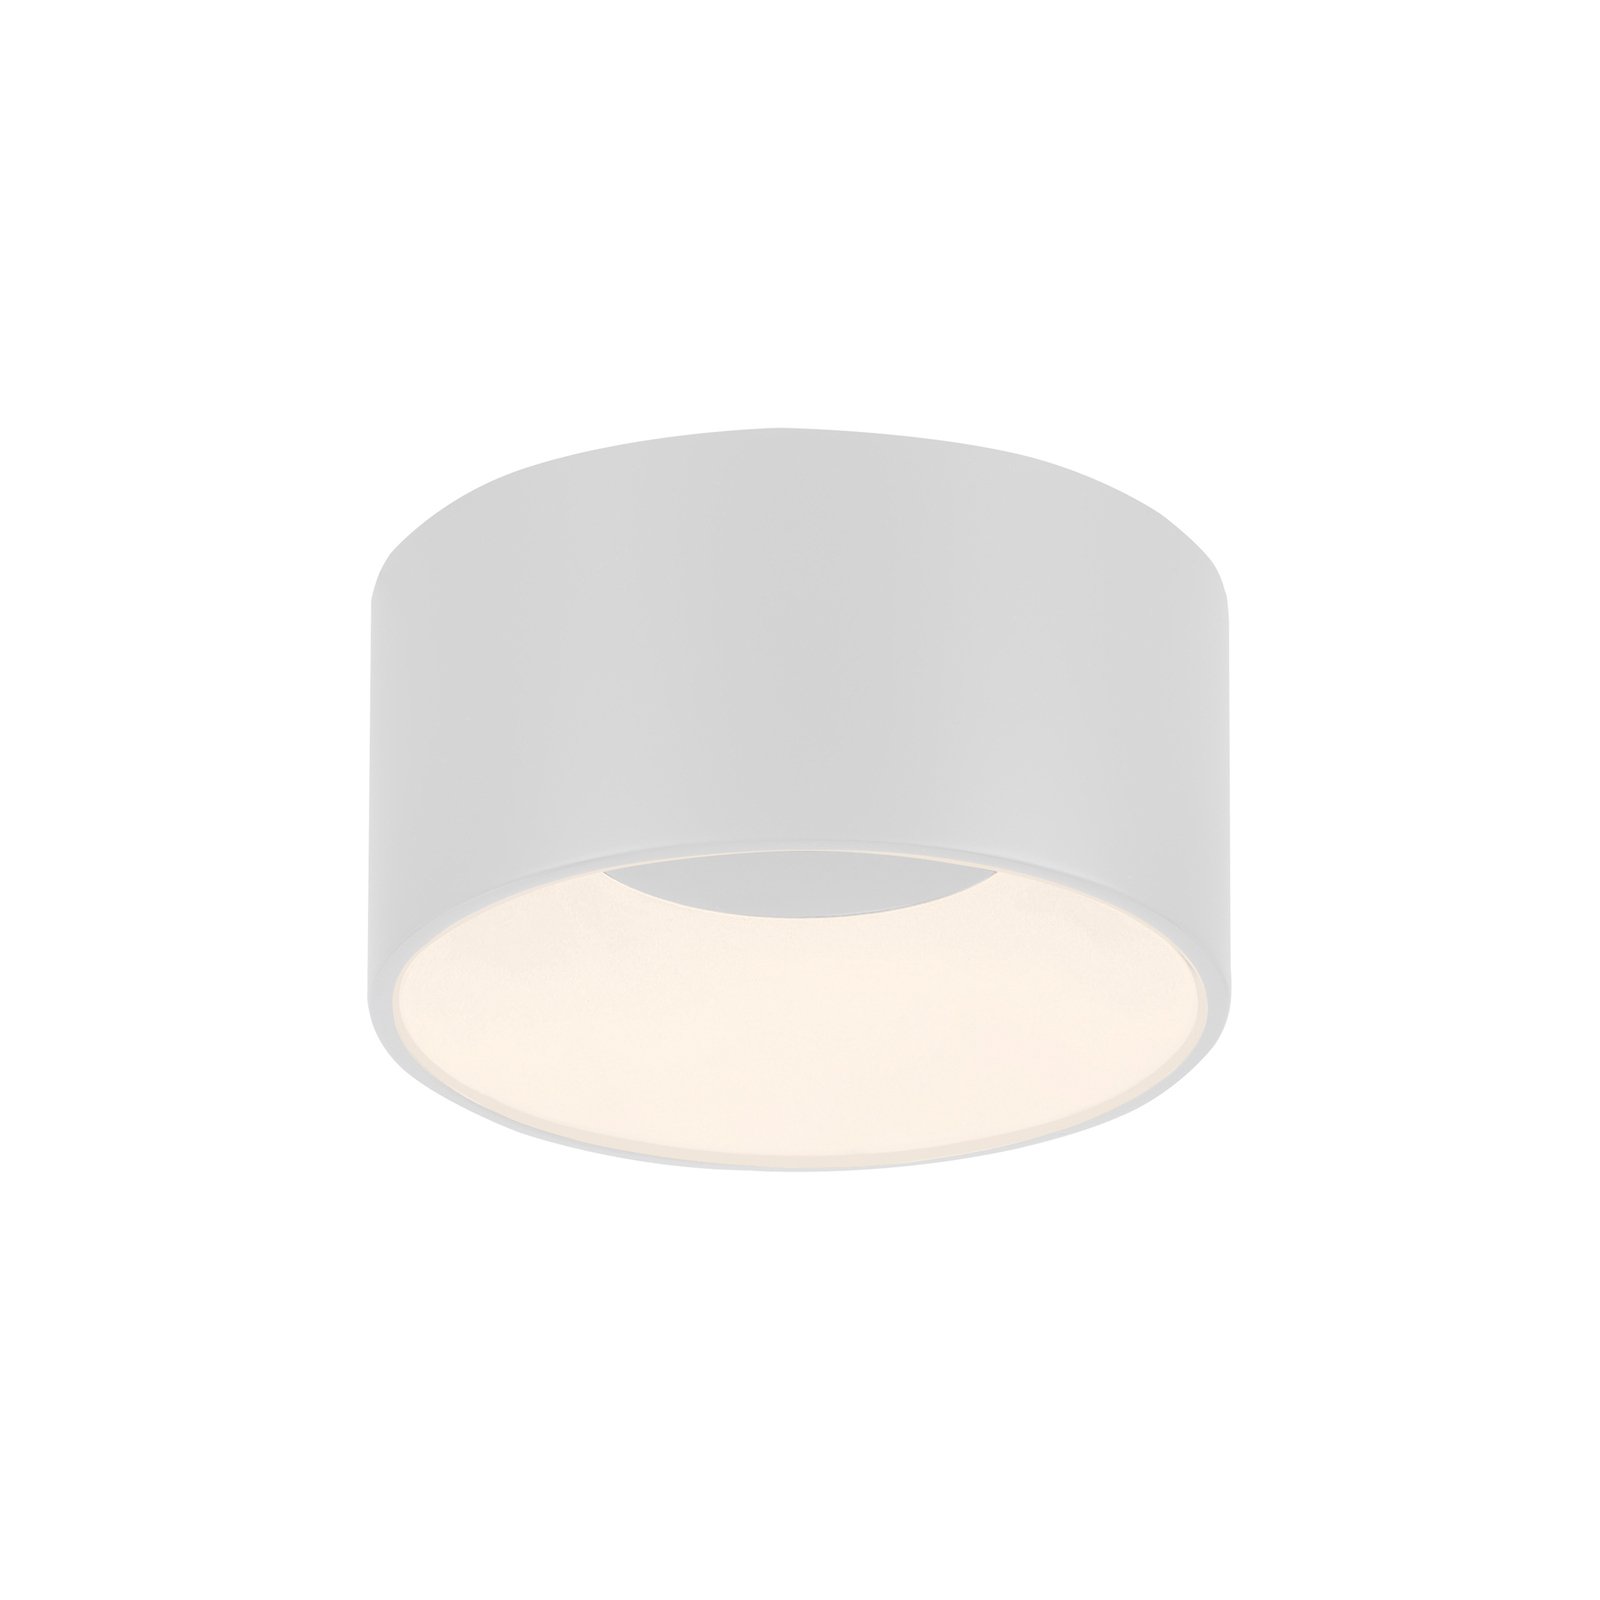 JUST LIGHT. Plafonnier LED Tanika, blanc, Ø 16 cm, intensité variable